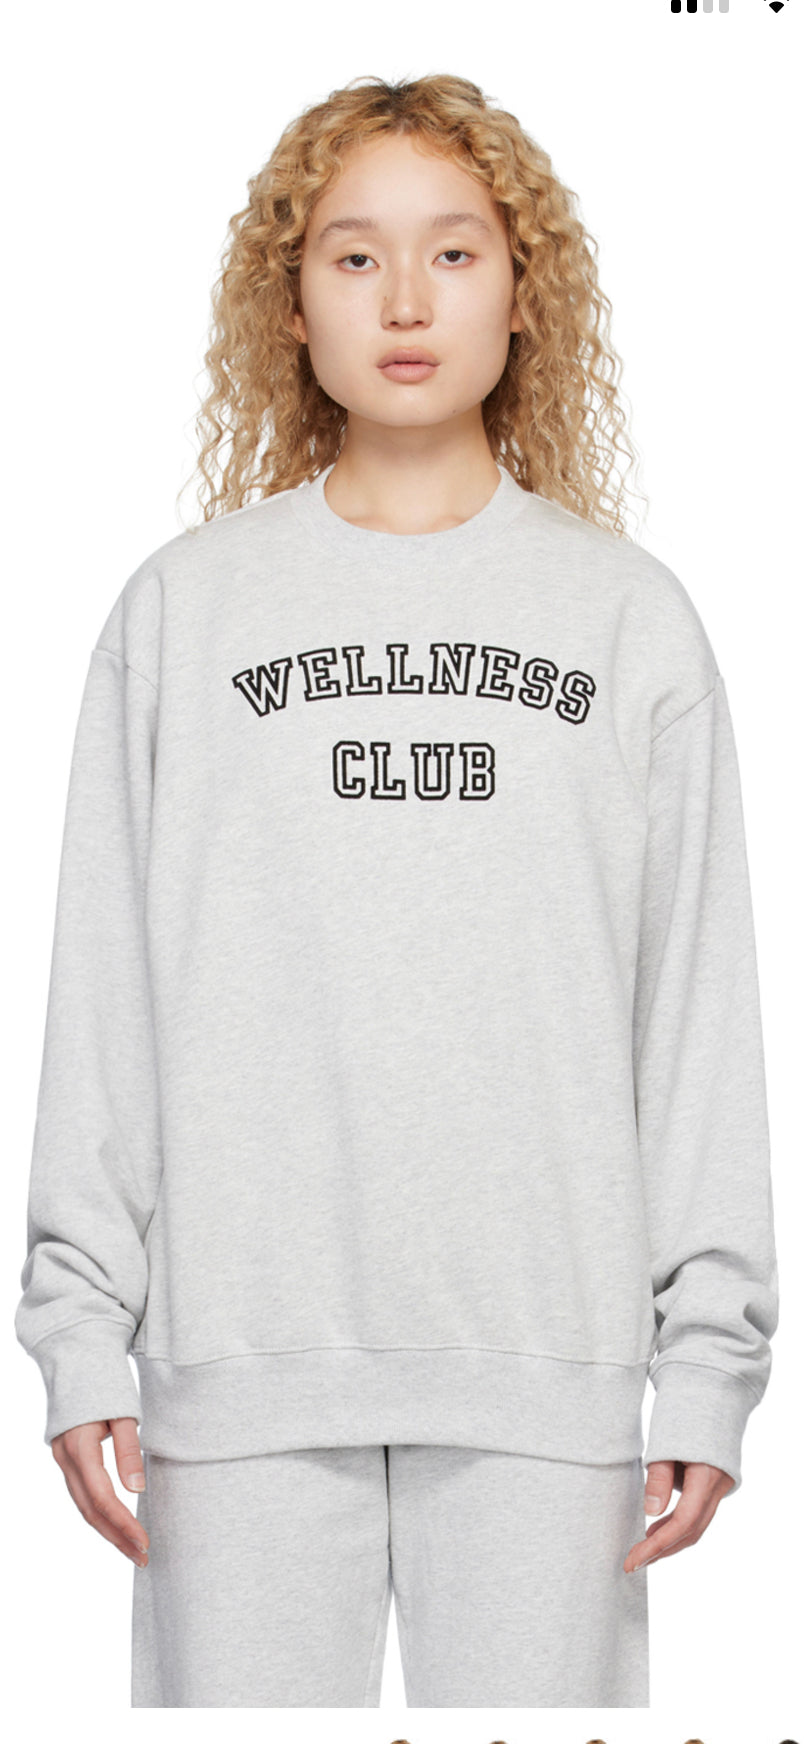 ‘Wellnes Club’ Sweatshirt